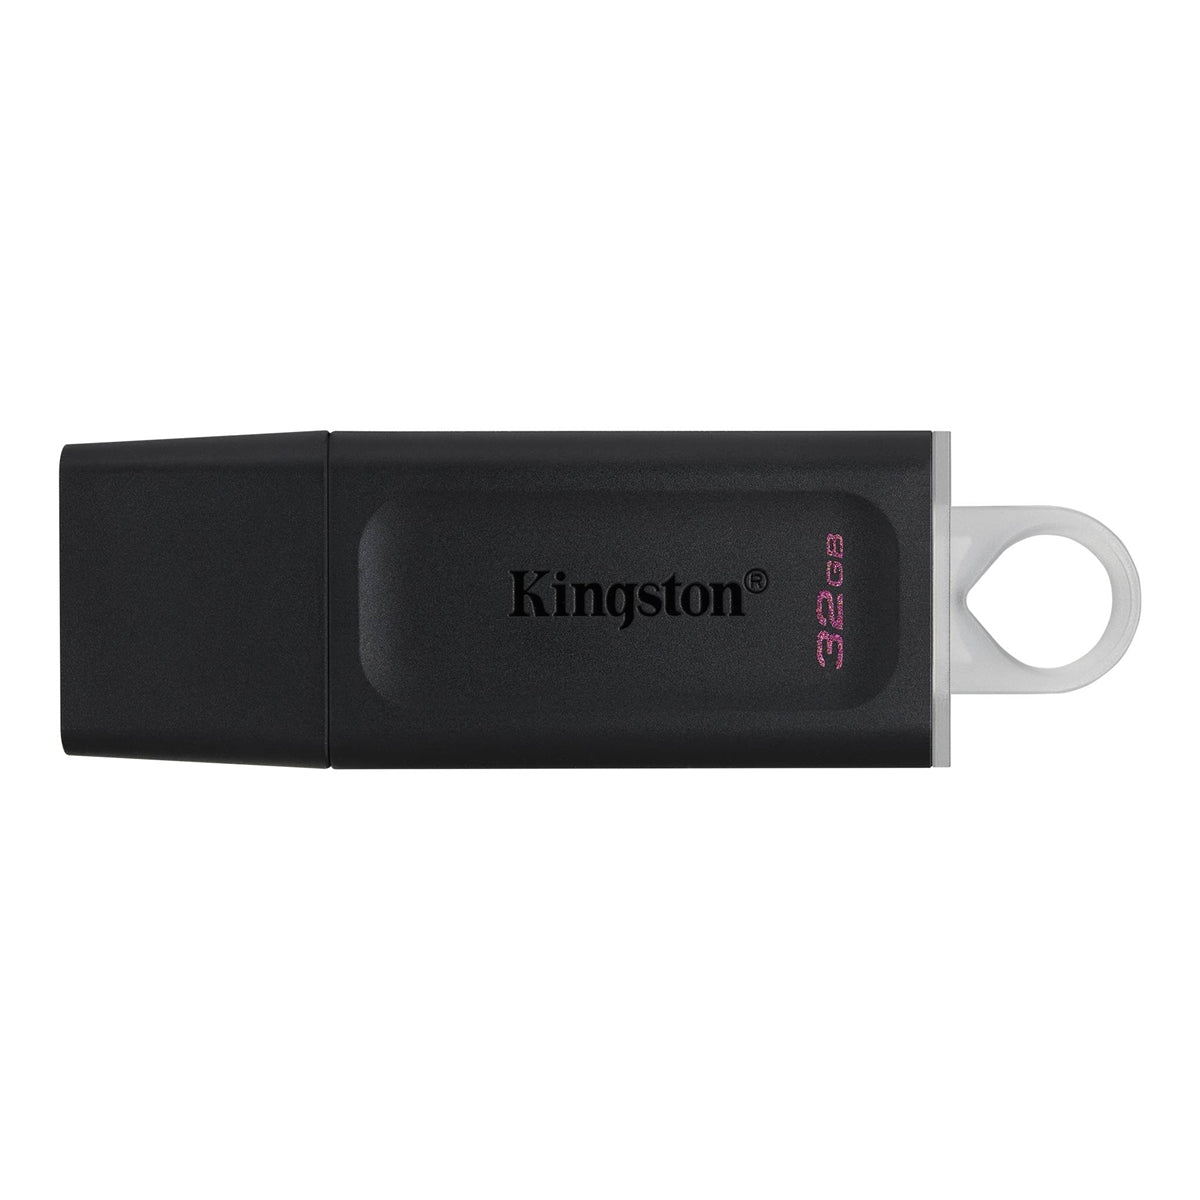 Kingston (USB) 3.2 Gen 1 Flash Drive 32GB Black & White-Memory Cards & SSD-First Help Tech